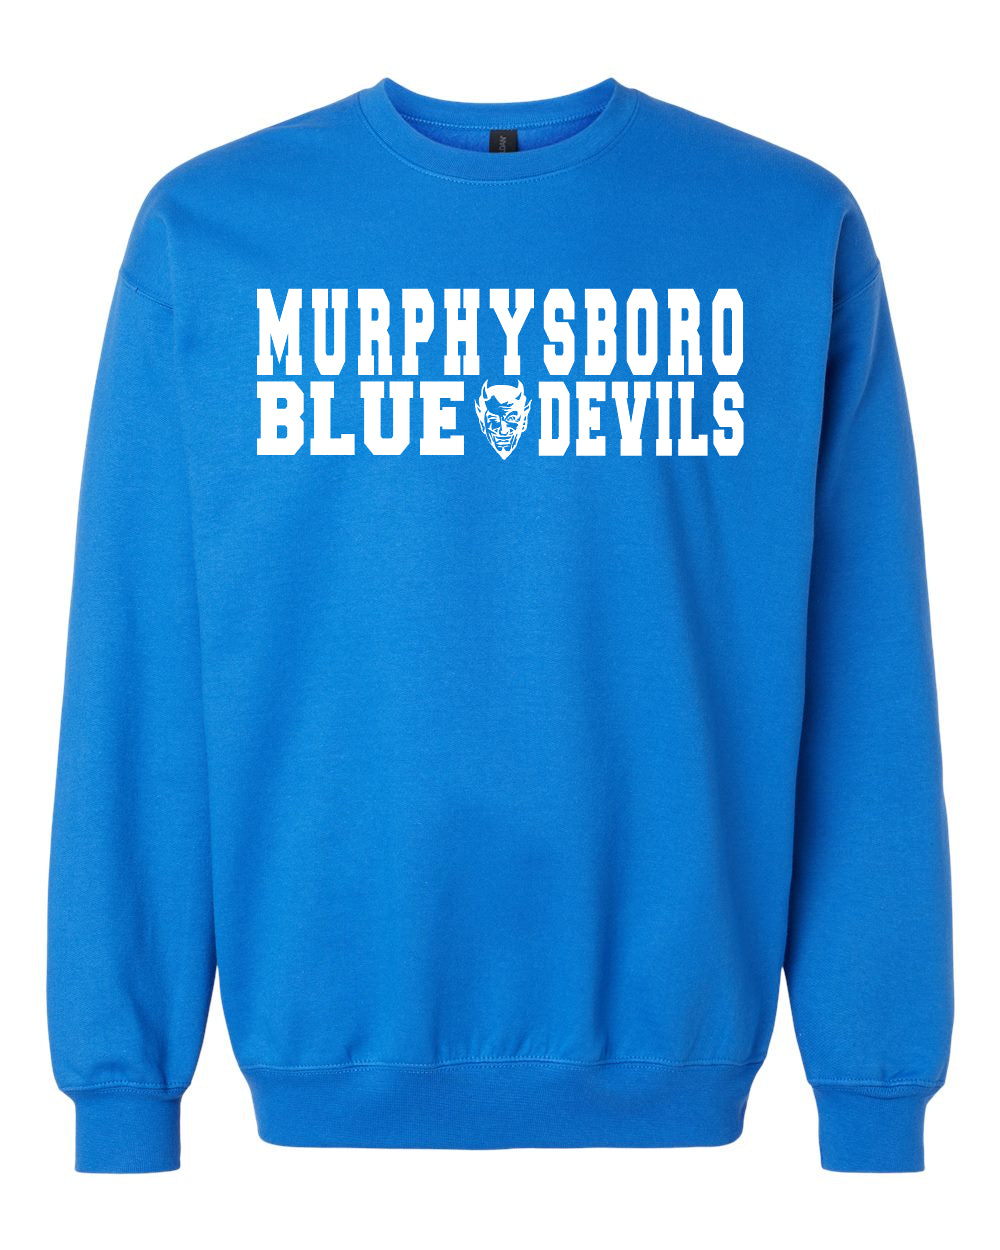 Murphysboro Blue Devils on Royal